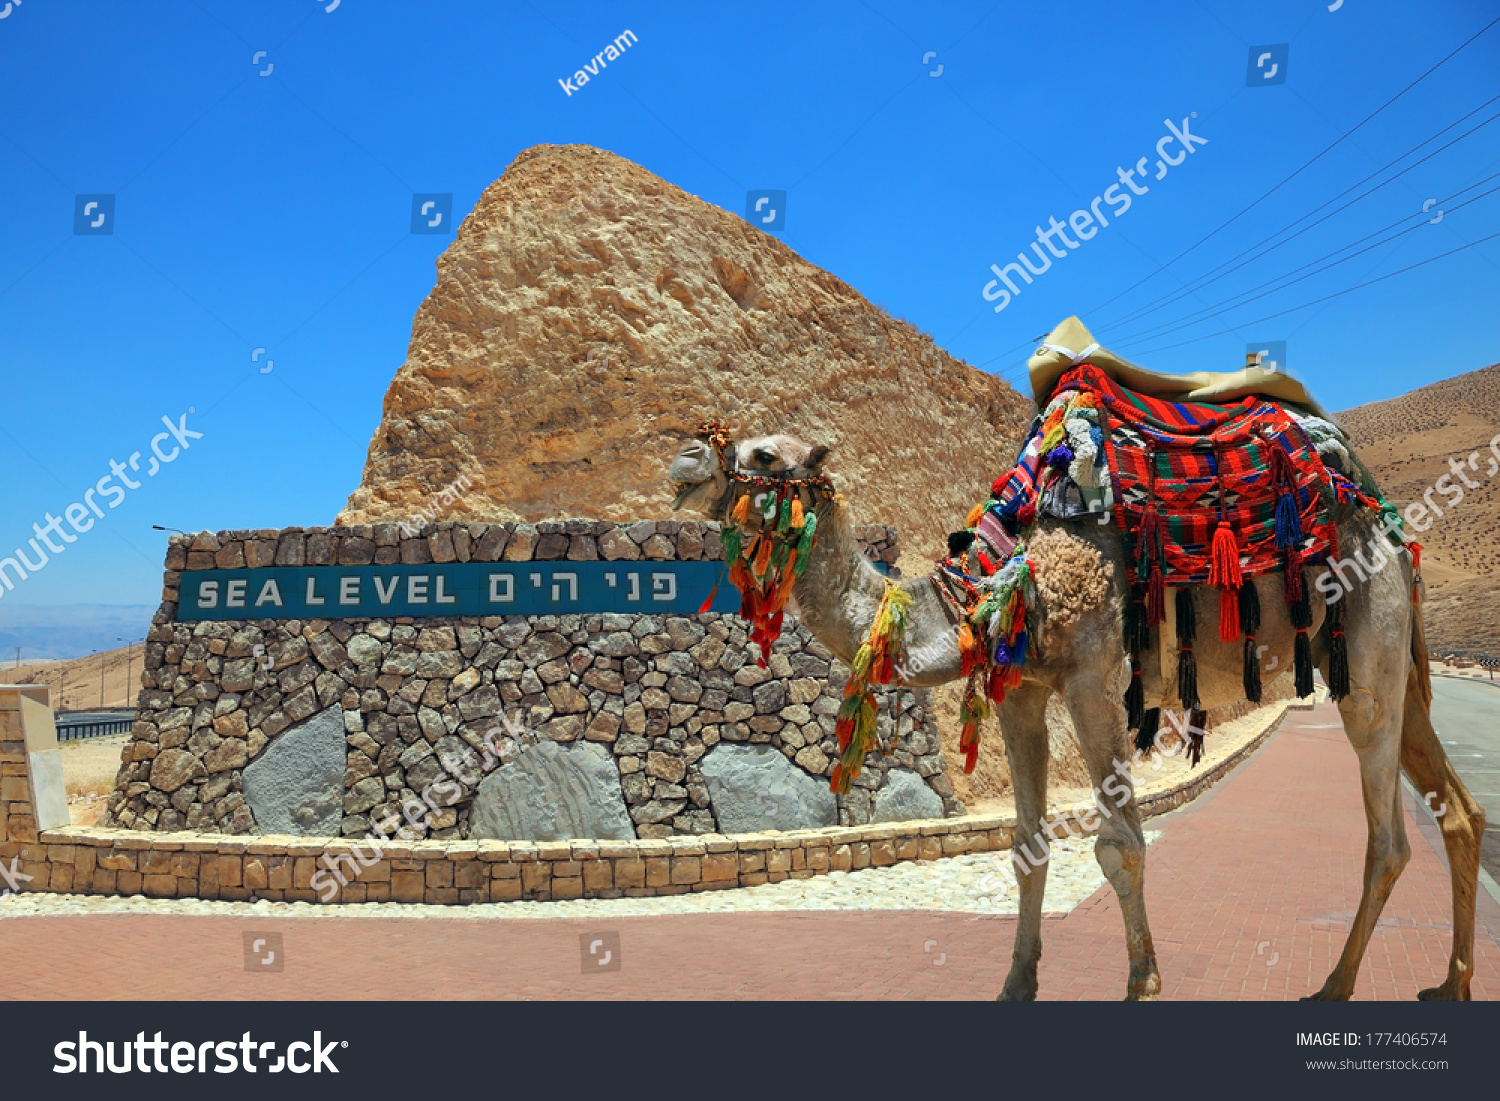 Essay on camel the ship of the desert